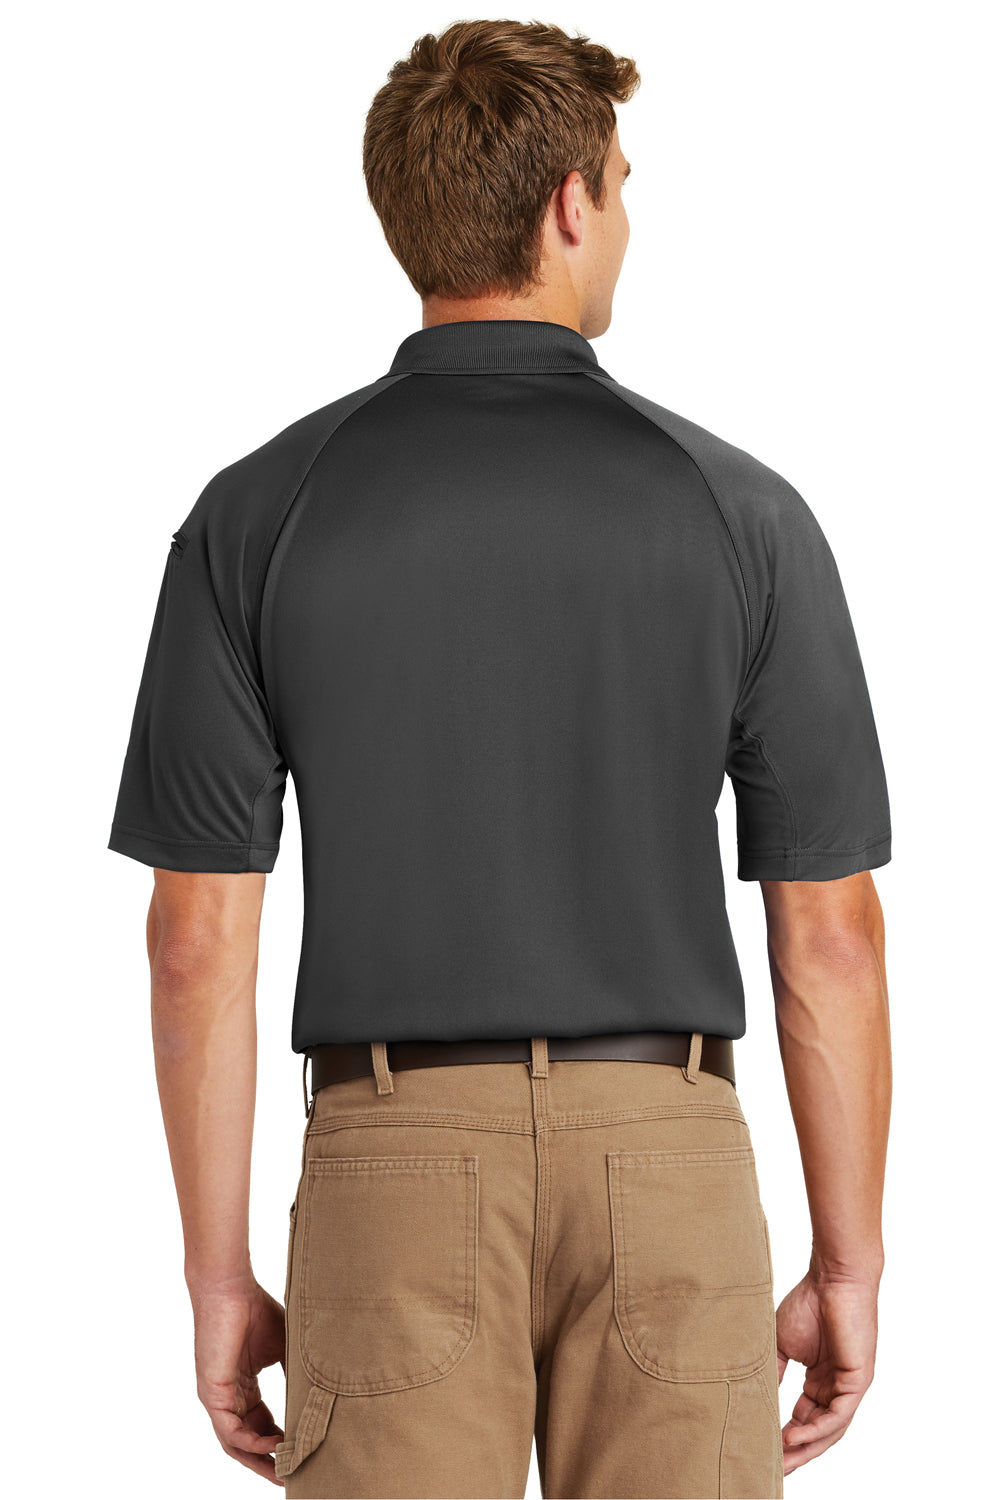 CornerStone CS410 Mens Select Tactical Moisture Wicking Short Sleeve Polo Shirt Charcoal Grey Back